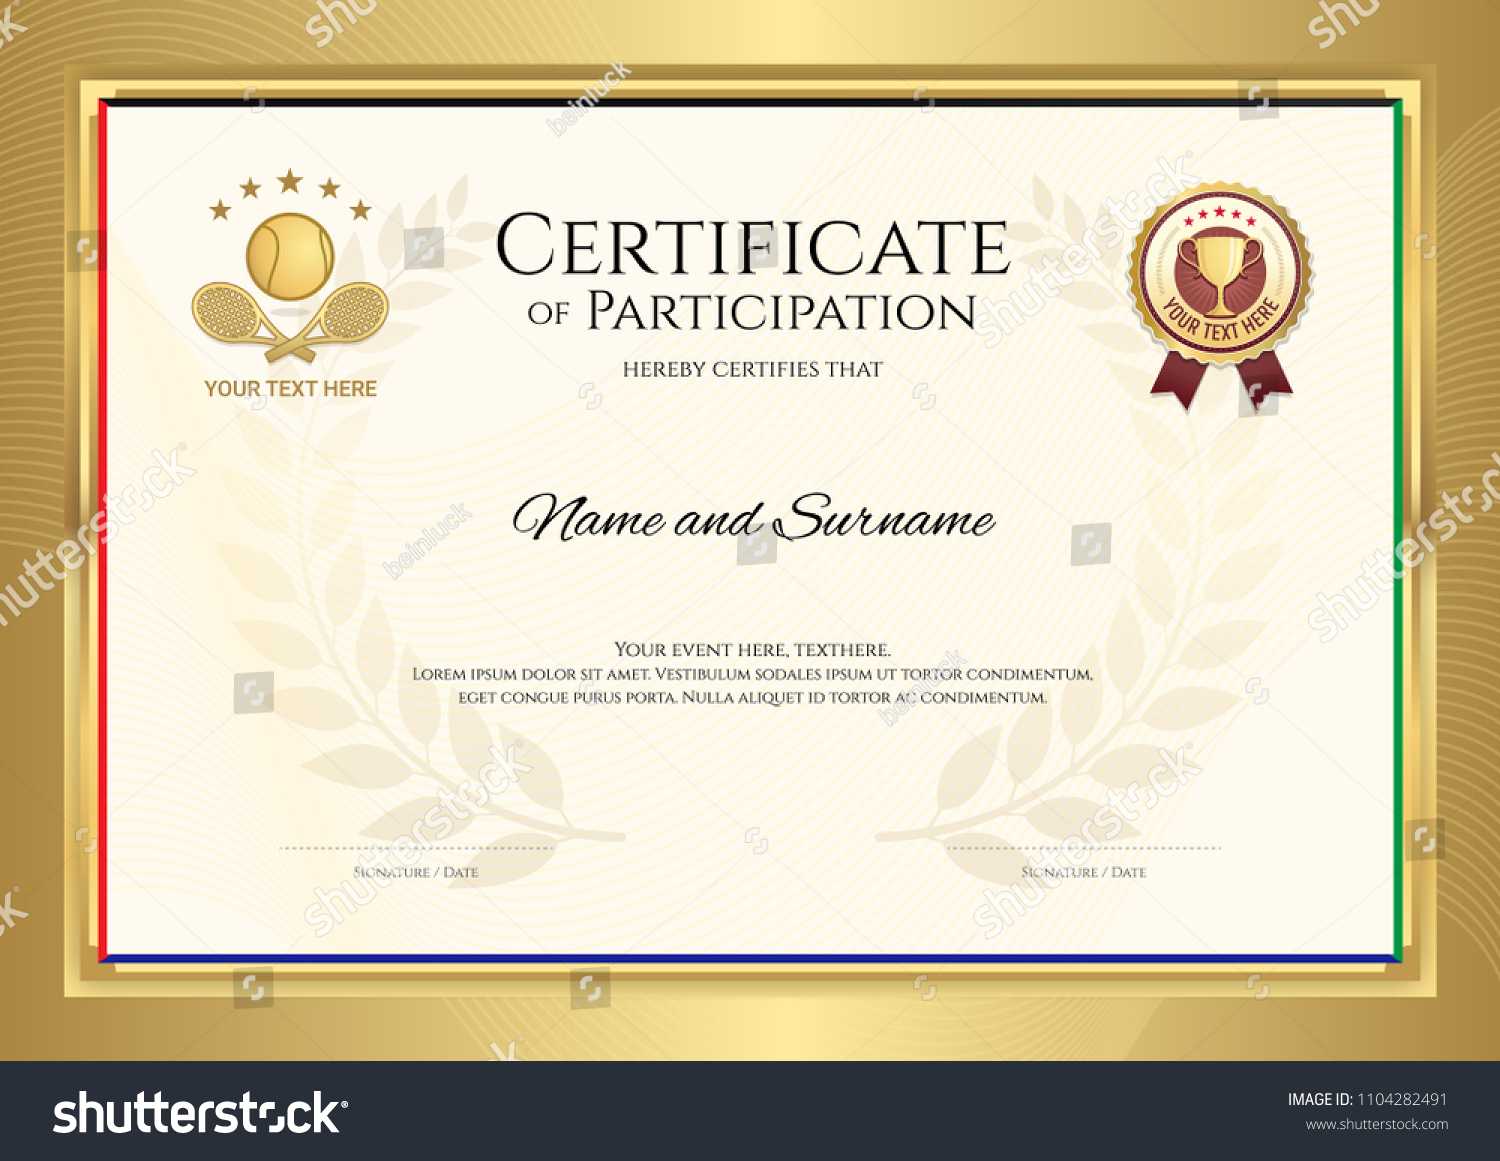 Certificate Template Tennis Sport Theme Gold Stock Image With Tennis Certificate Template Free